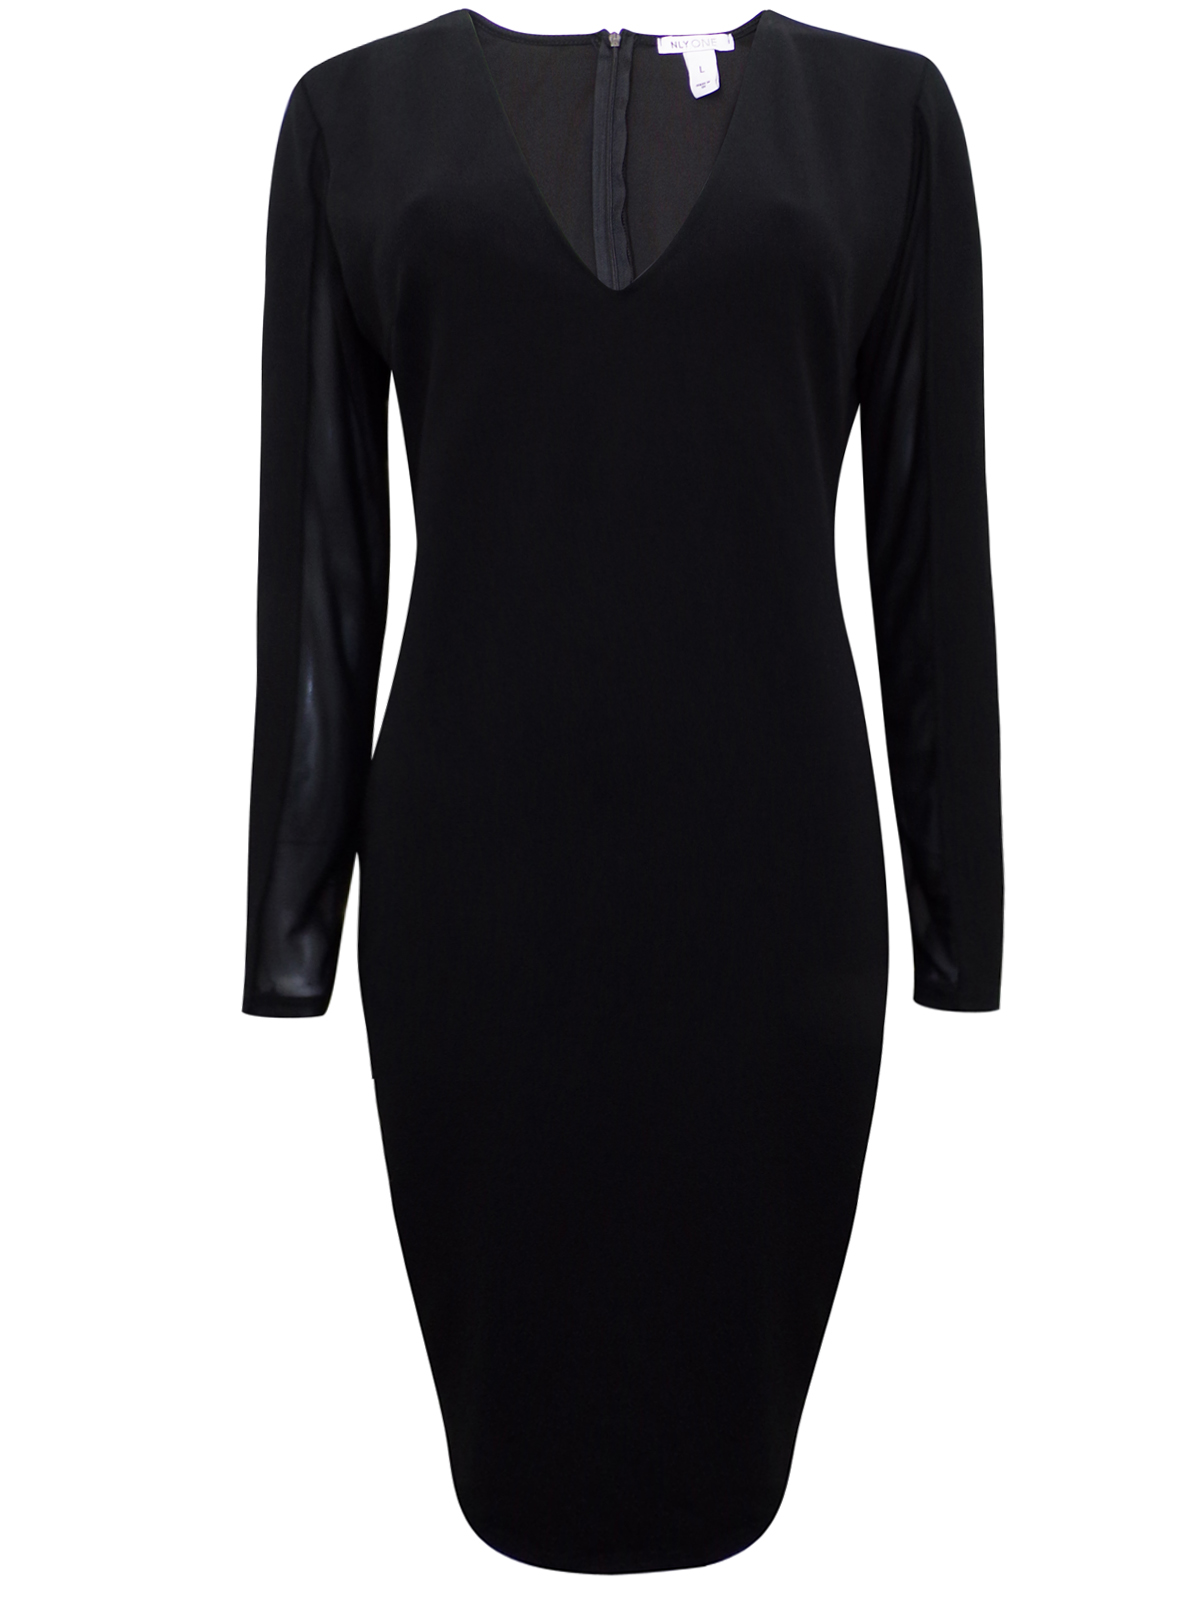 Nly One - - NlyOne BLACK Sheer Sleeve Bodycon Midi Dress - Size XSmall ...